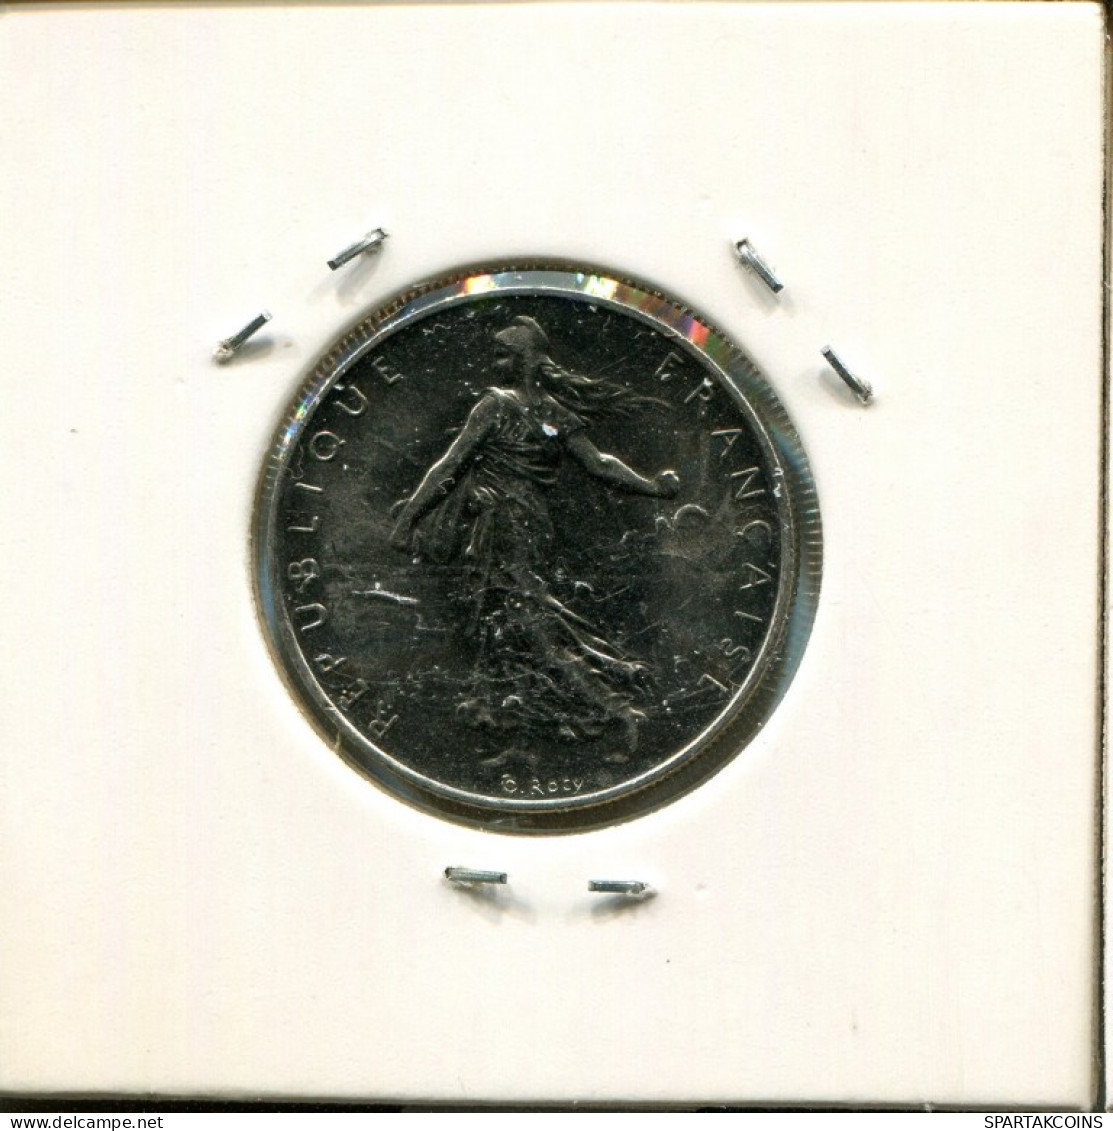 1 FRANC 1991 FRANCE Coin French Coin #AN973.U.A - 1 Franc